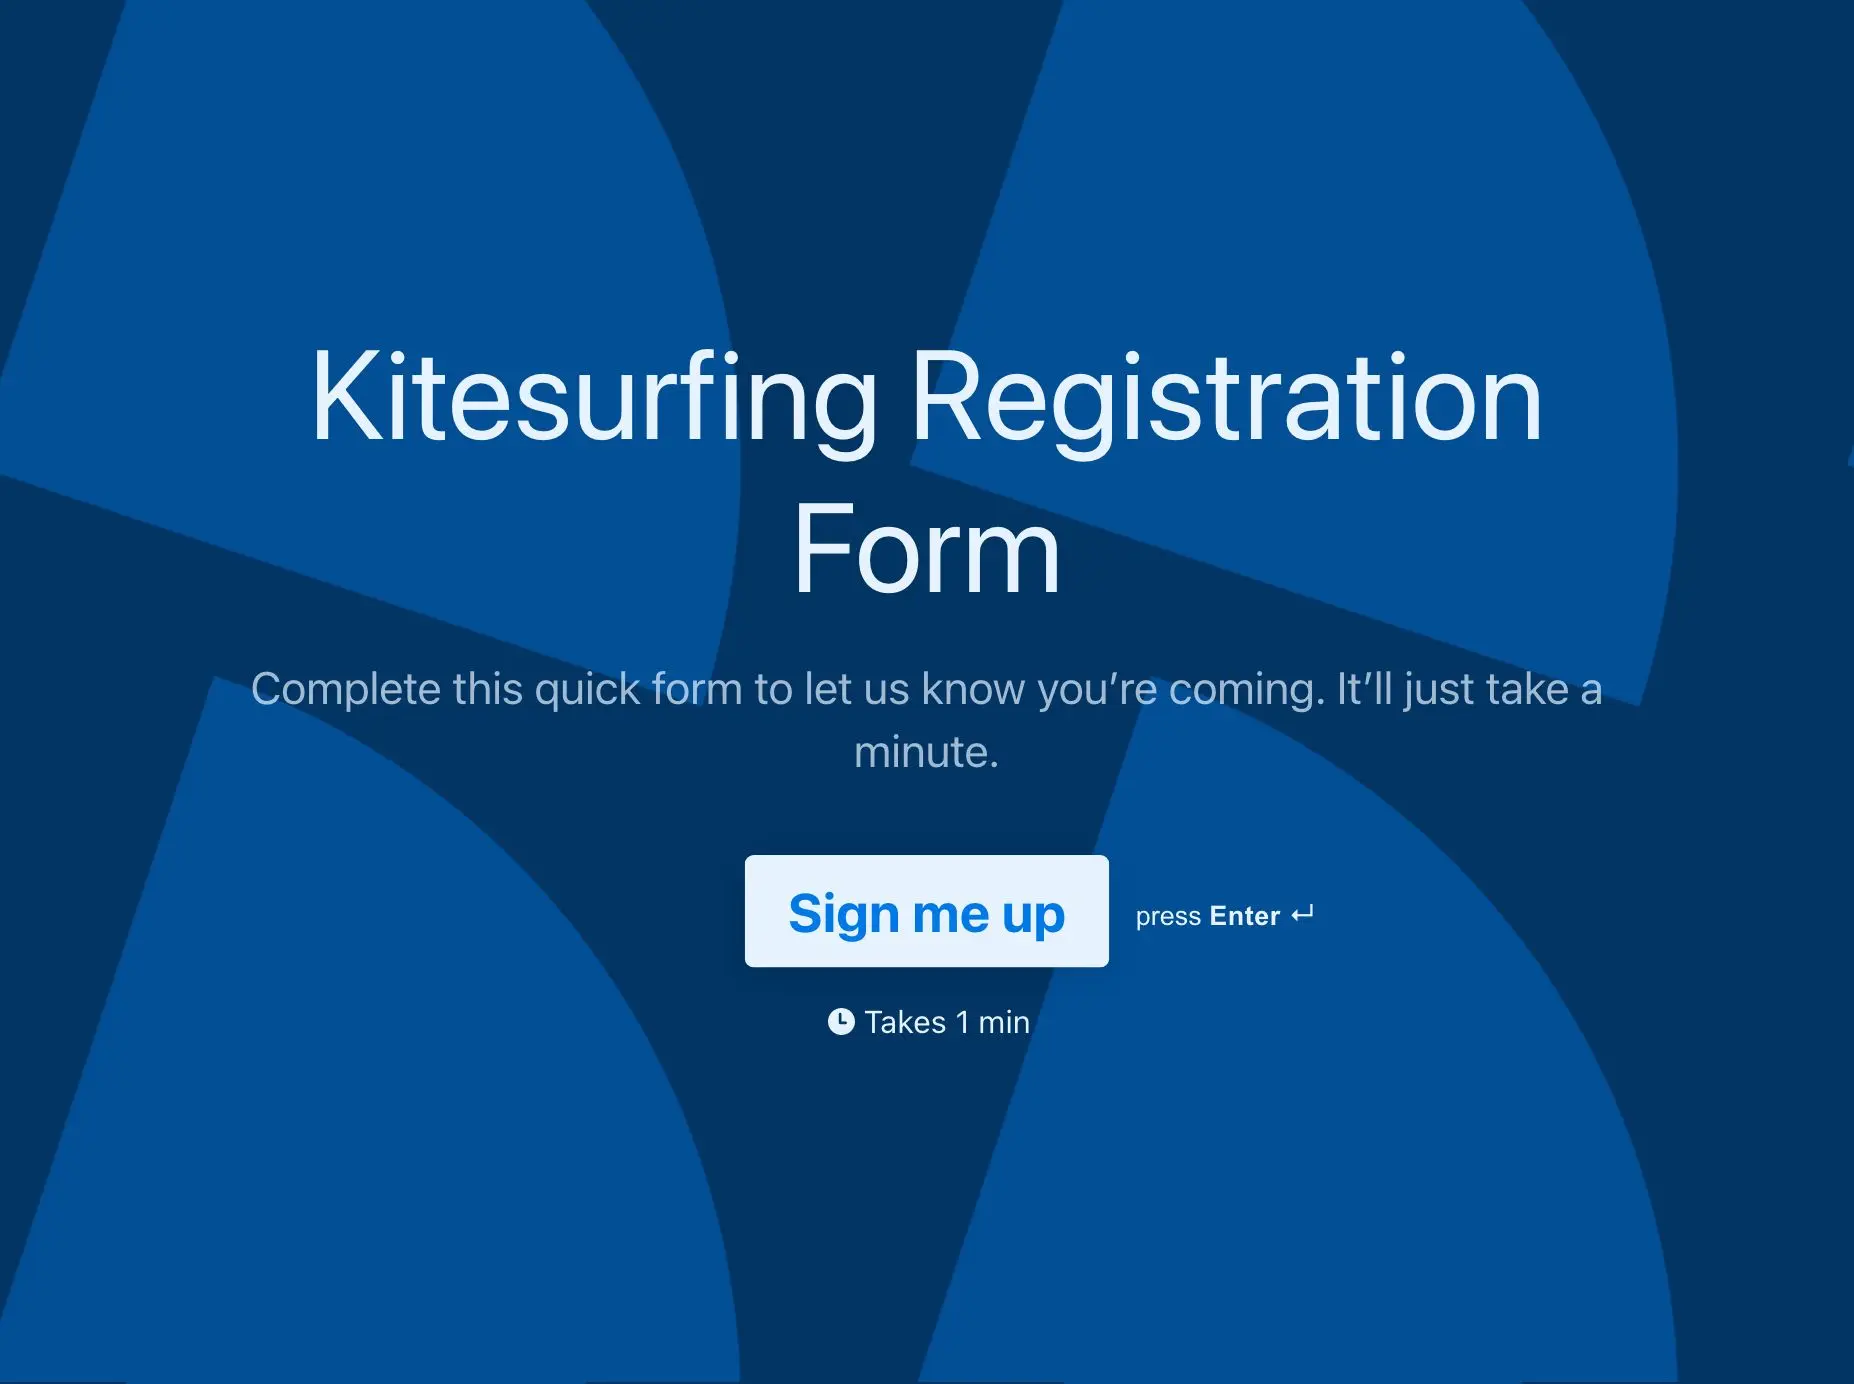 Kitesurfing Registration Form Template Hero